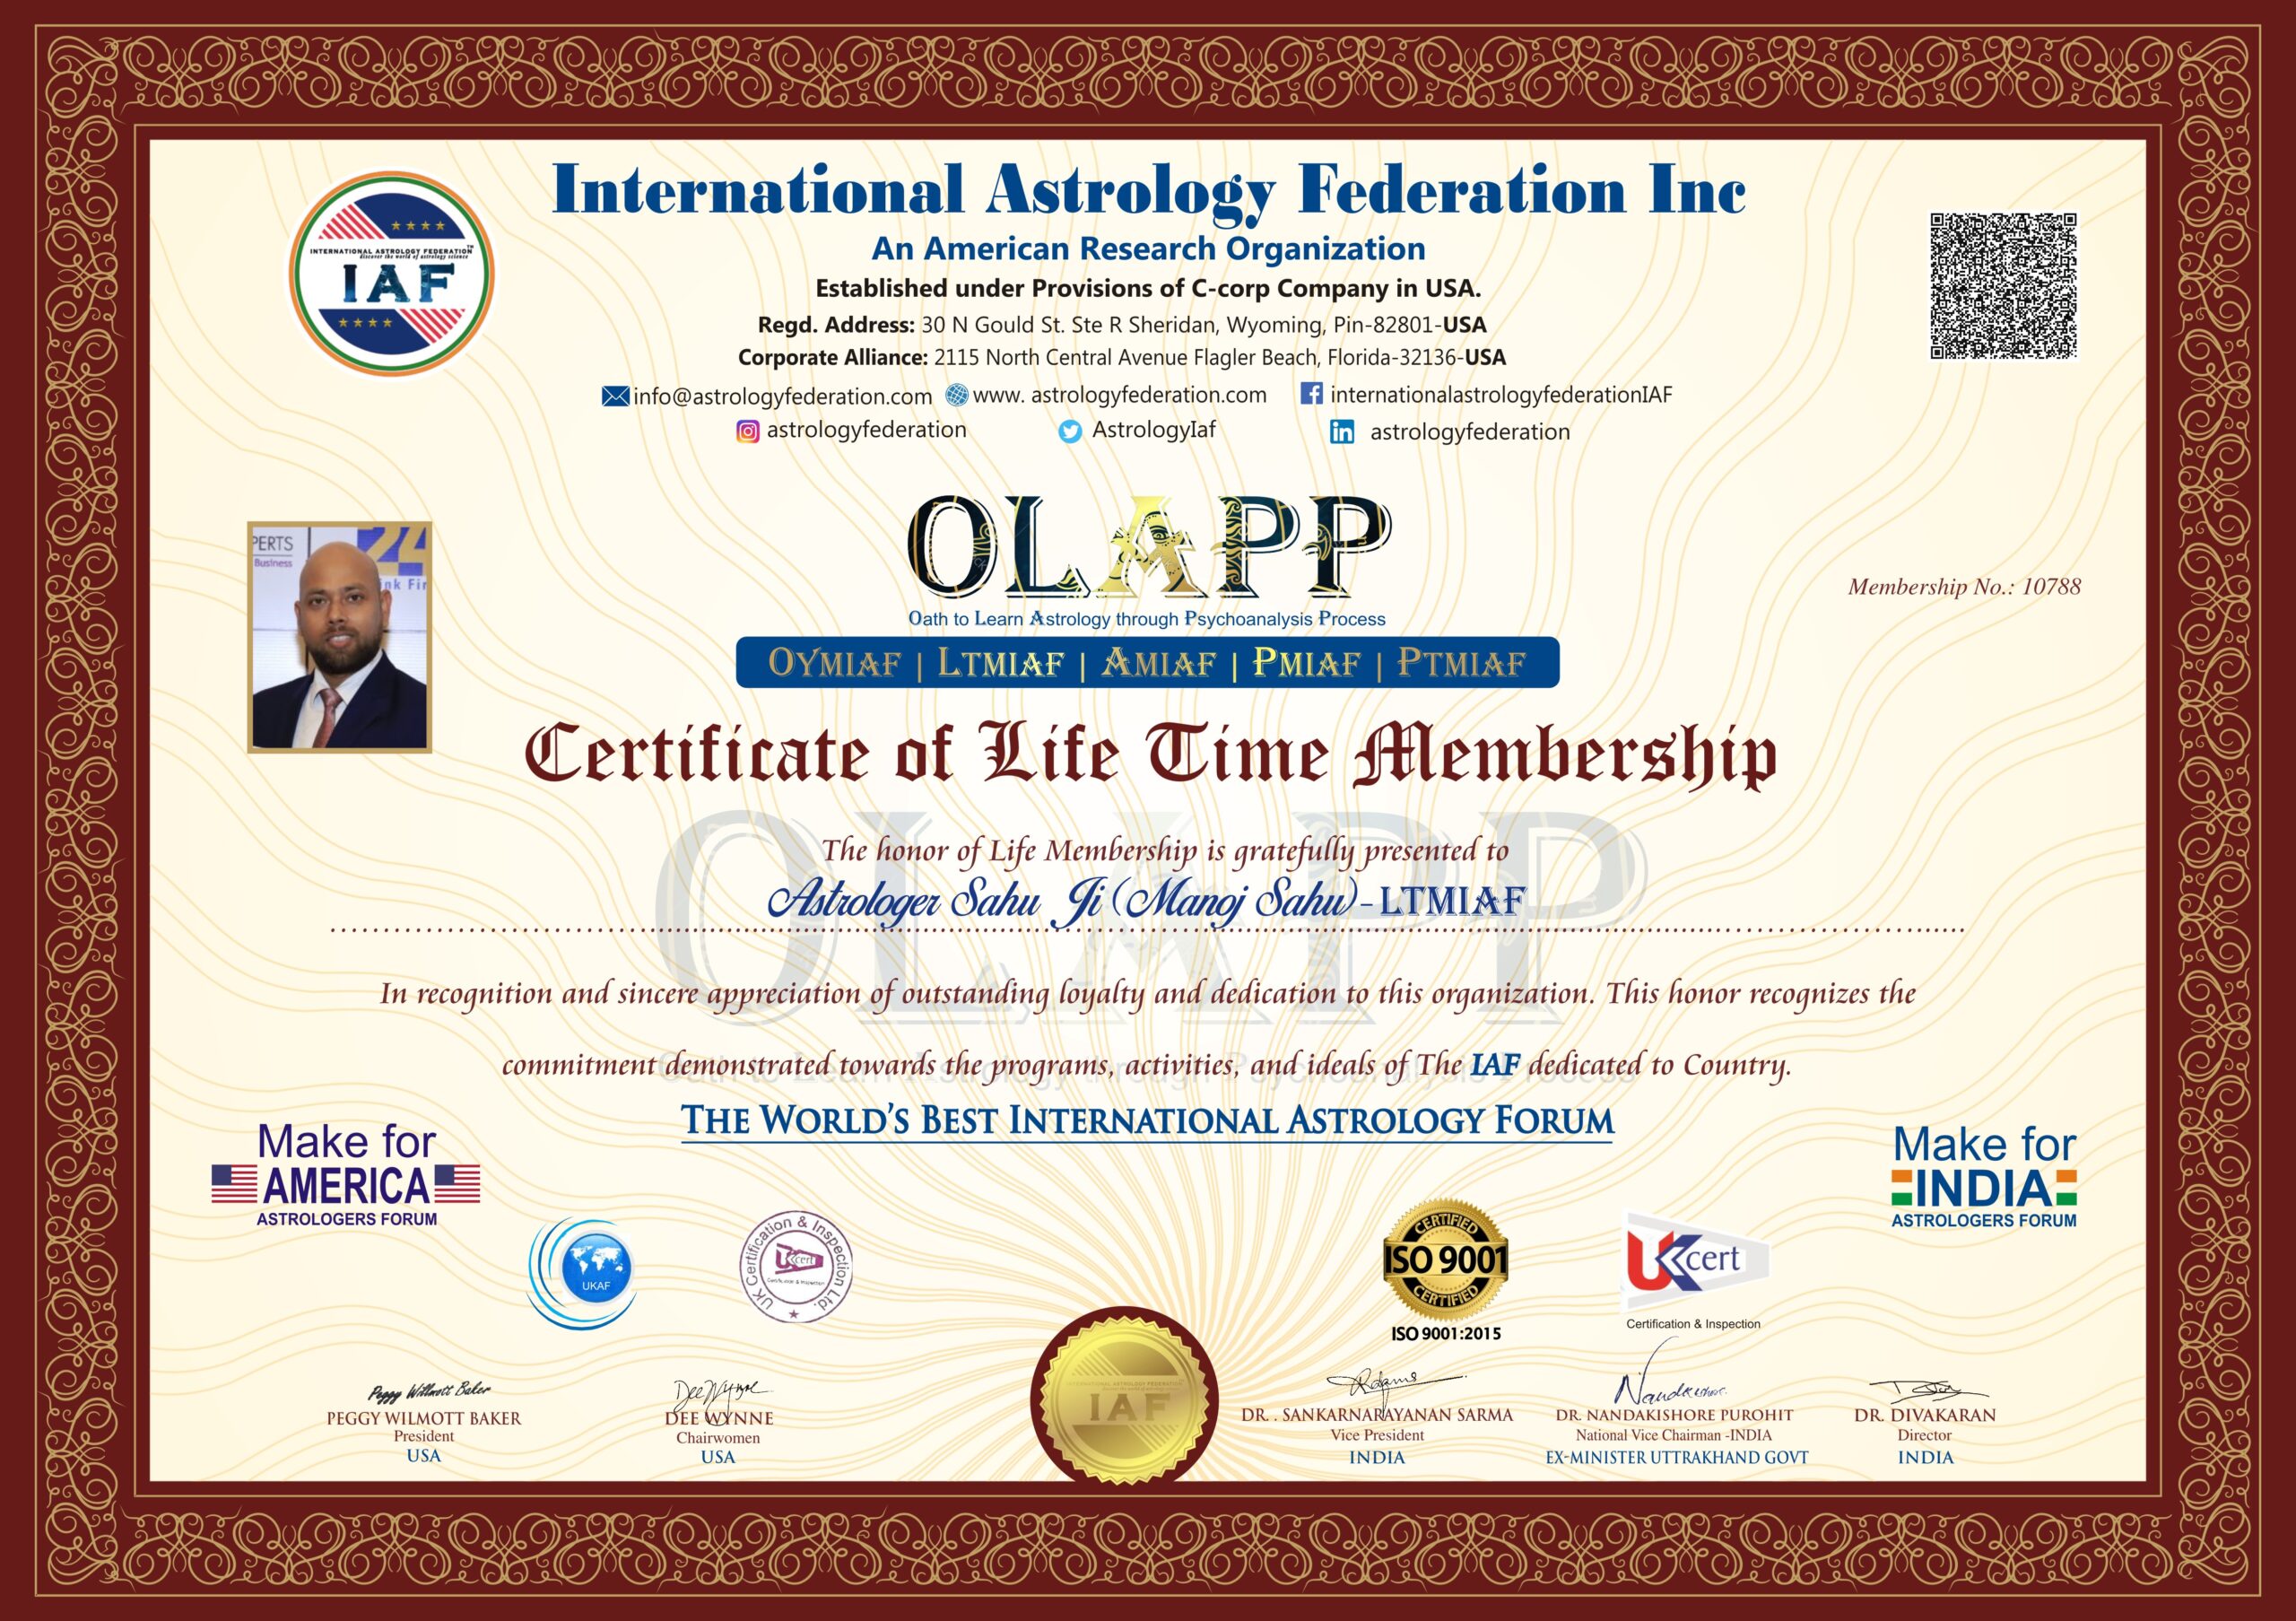 Astrologer Sahu Ji awarded IAF - Certificate by International Astrology Federation Inc